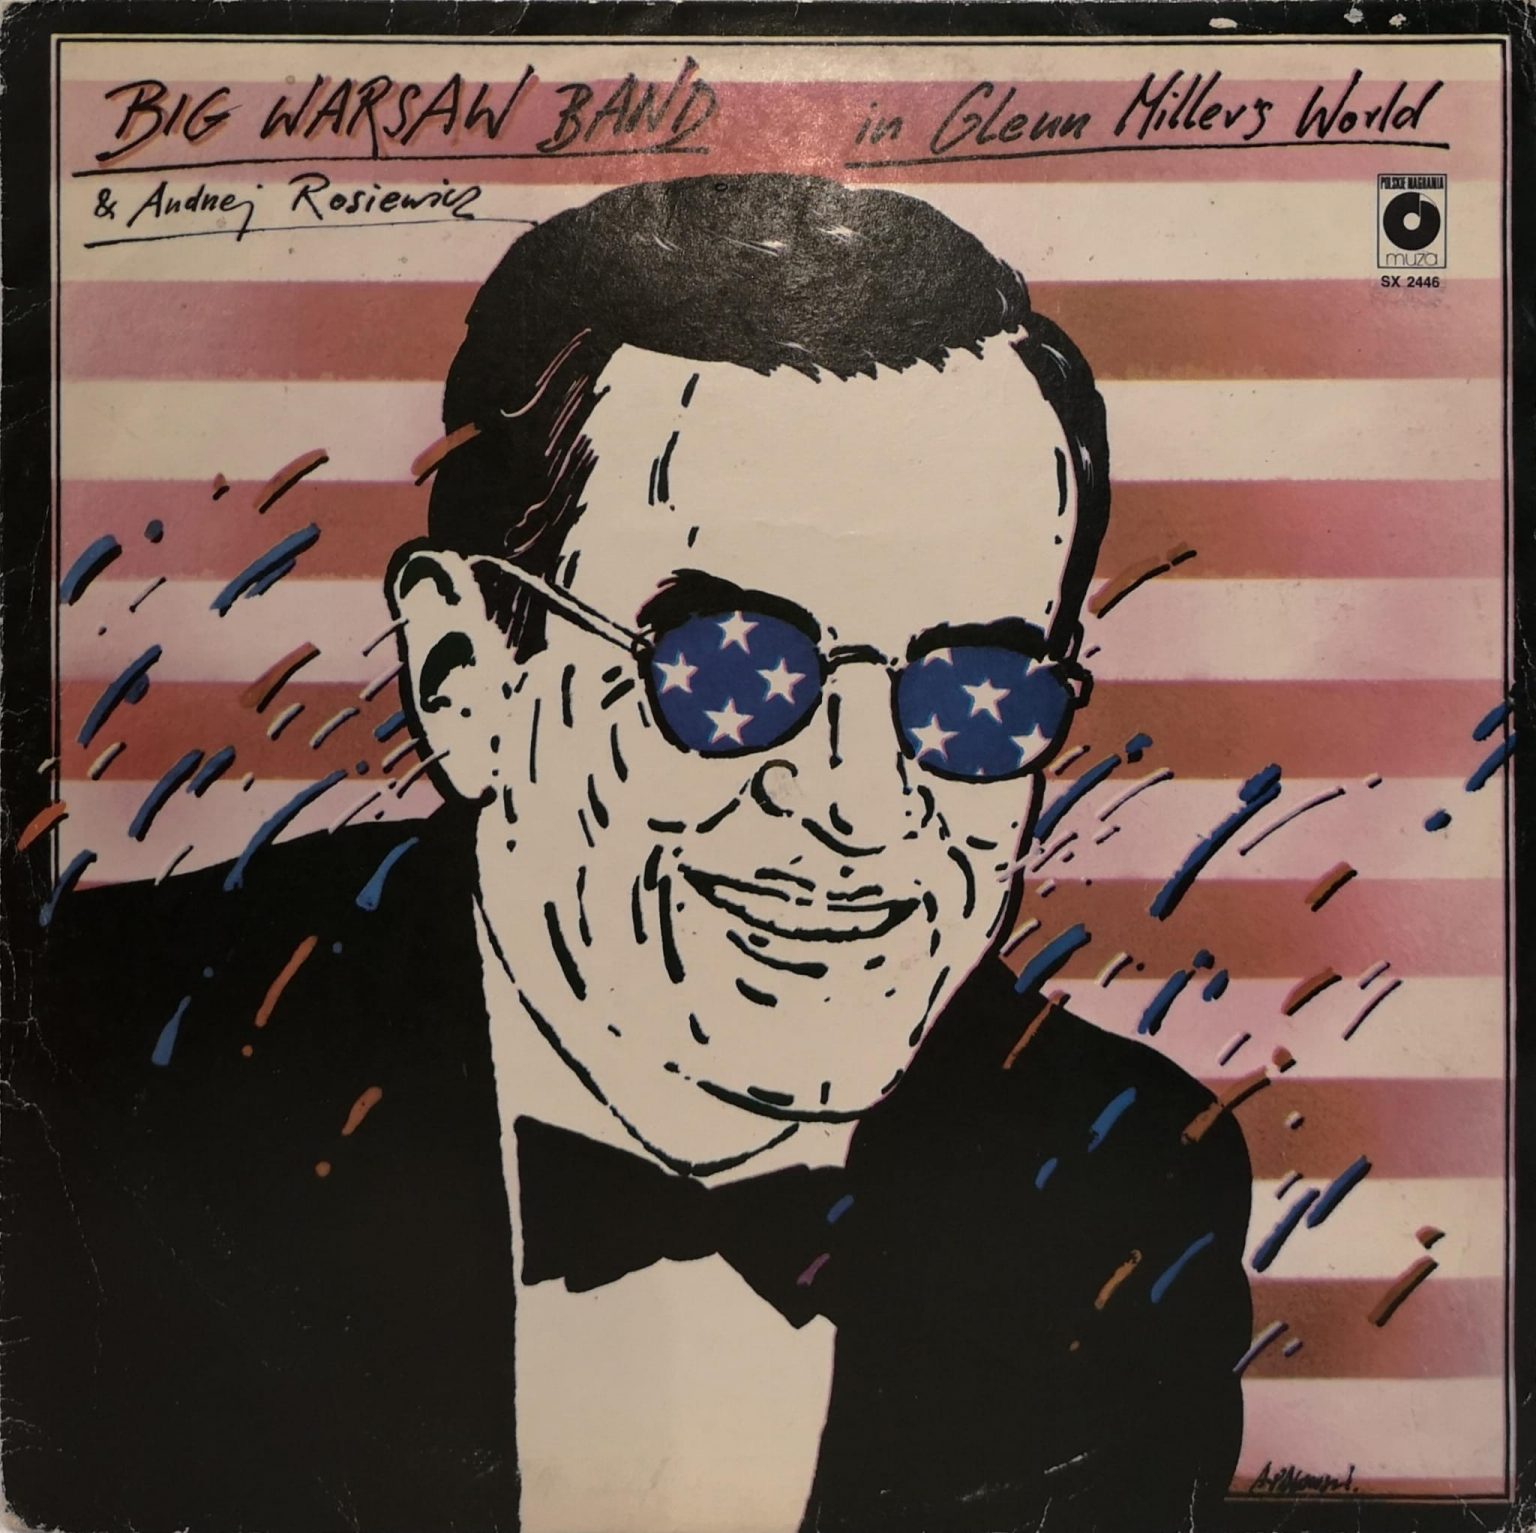 Big Warsaw Band – In Glen Miller’s World [Vinyl LP] (NM/VG)